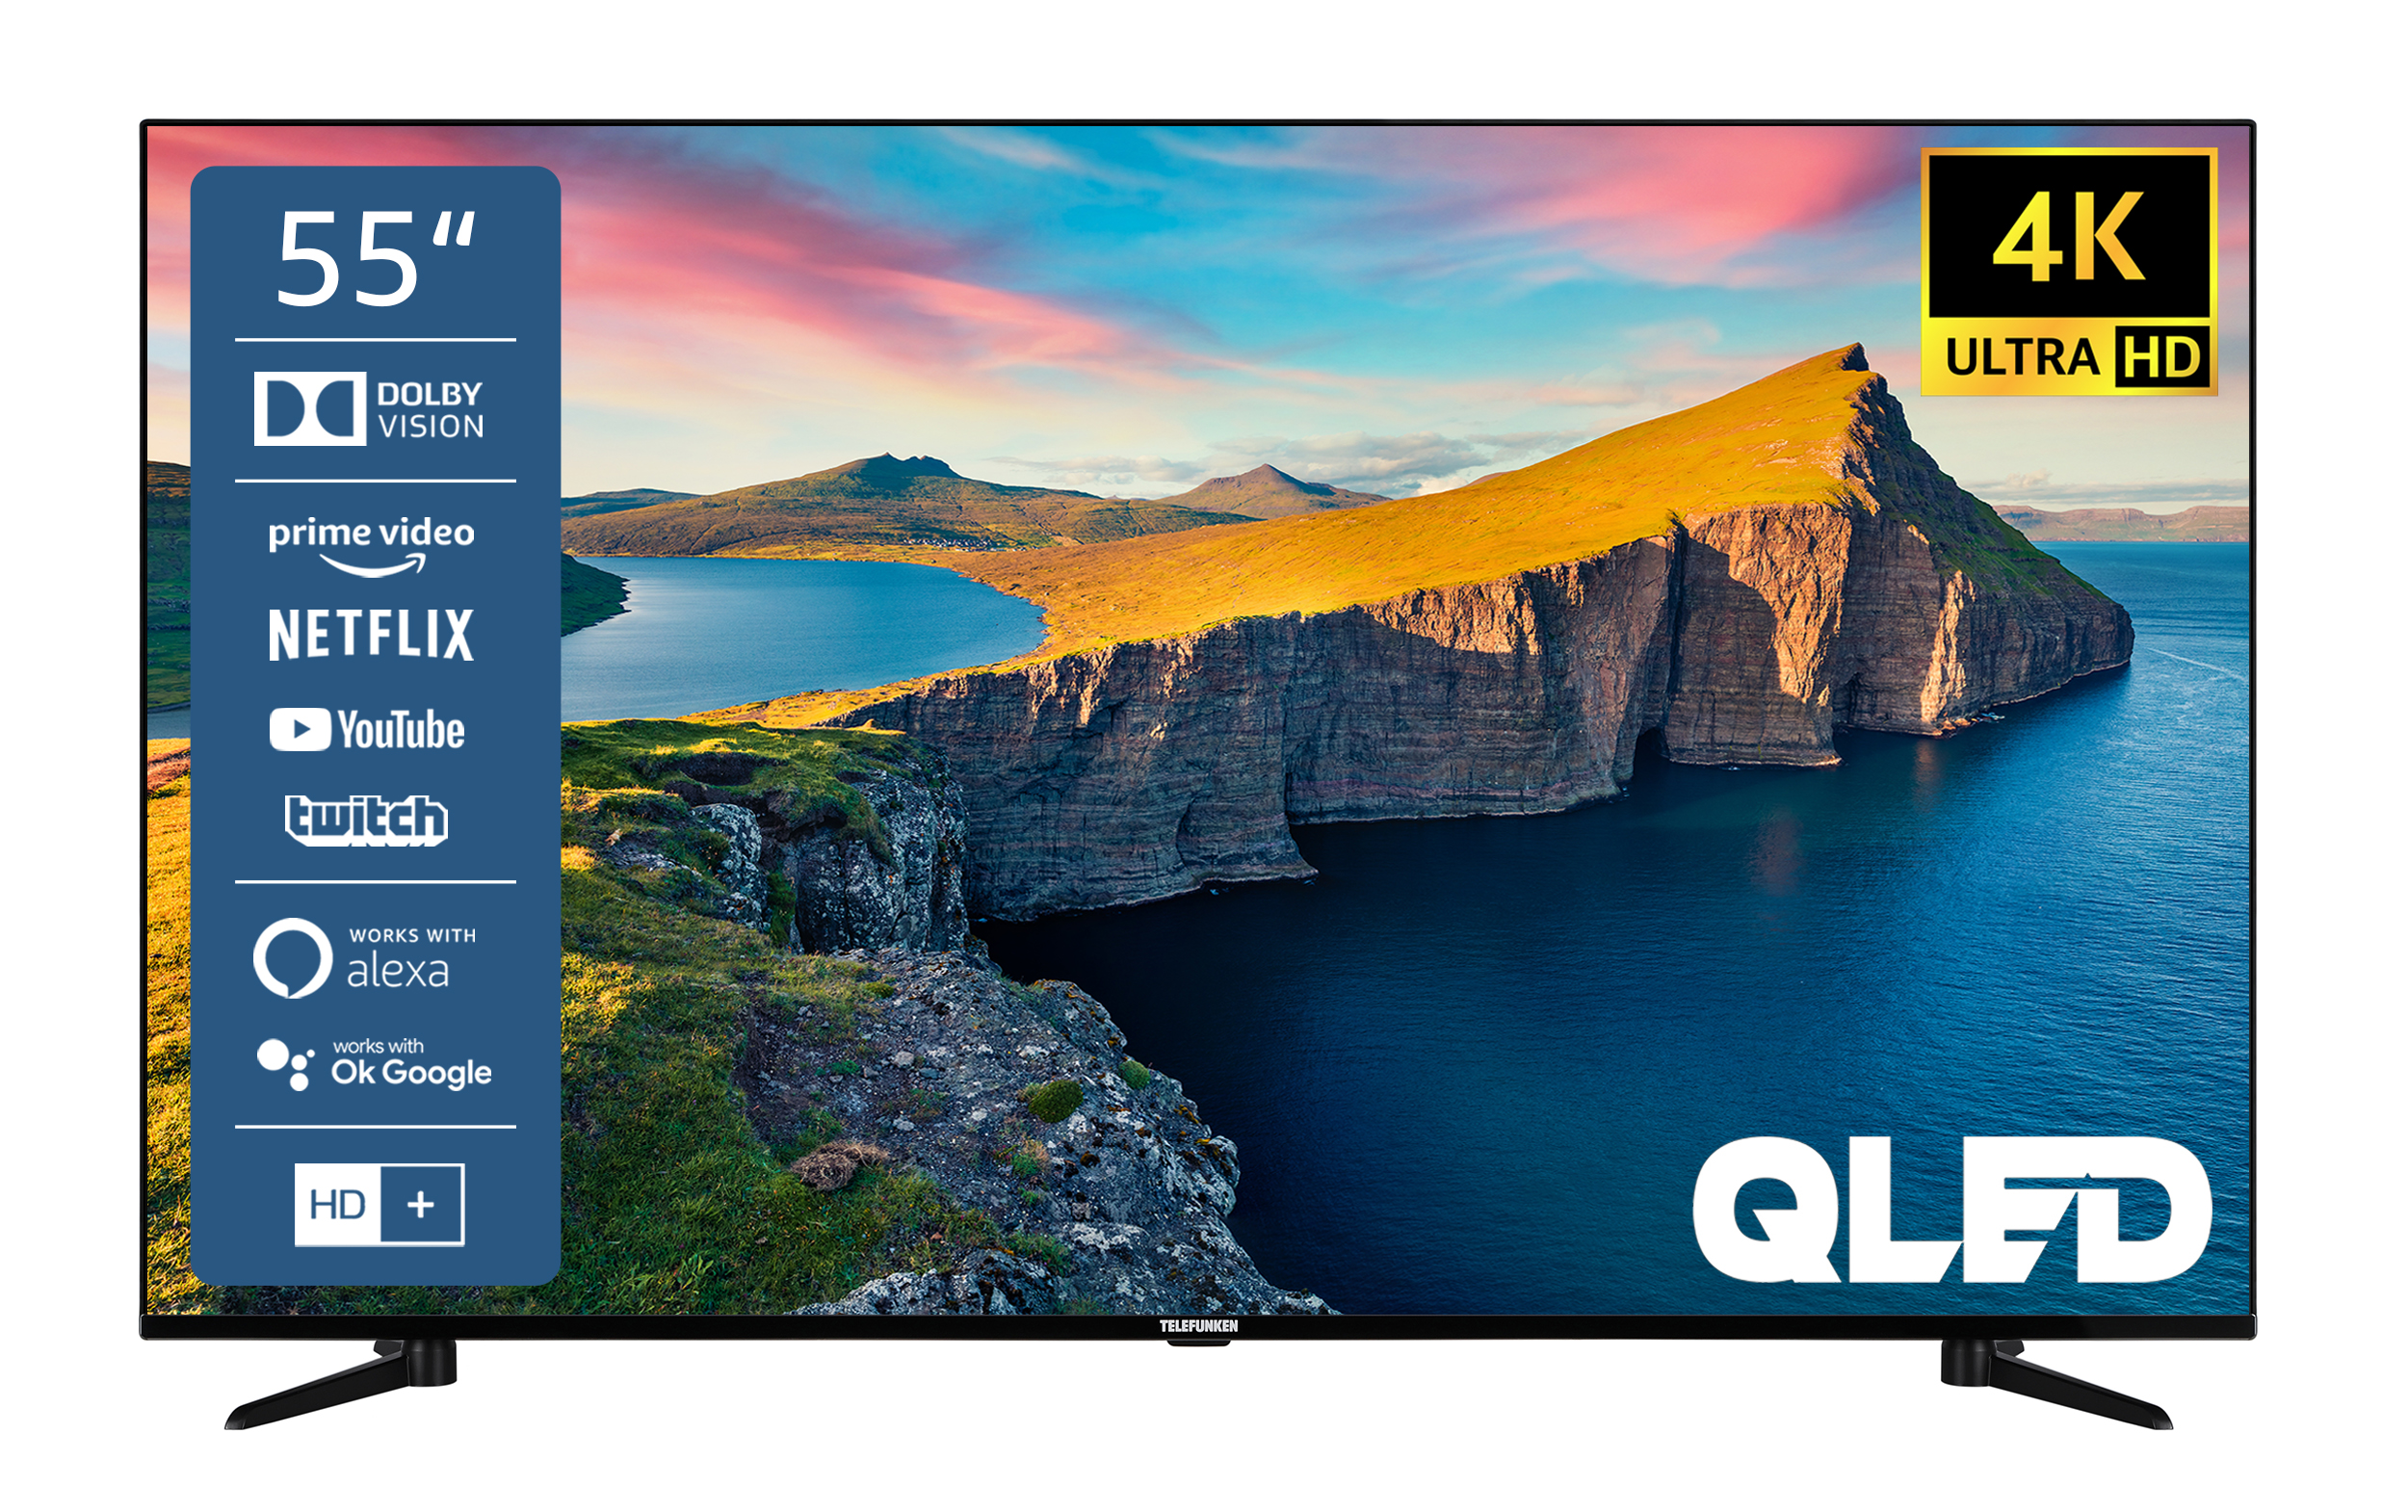 QLED QU55K800 (Flat, TV) TV 139 SMART TELEFUNKEN / cm, Zoll 4K, UHD 55